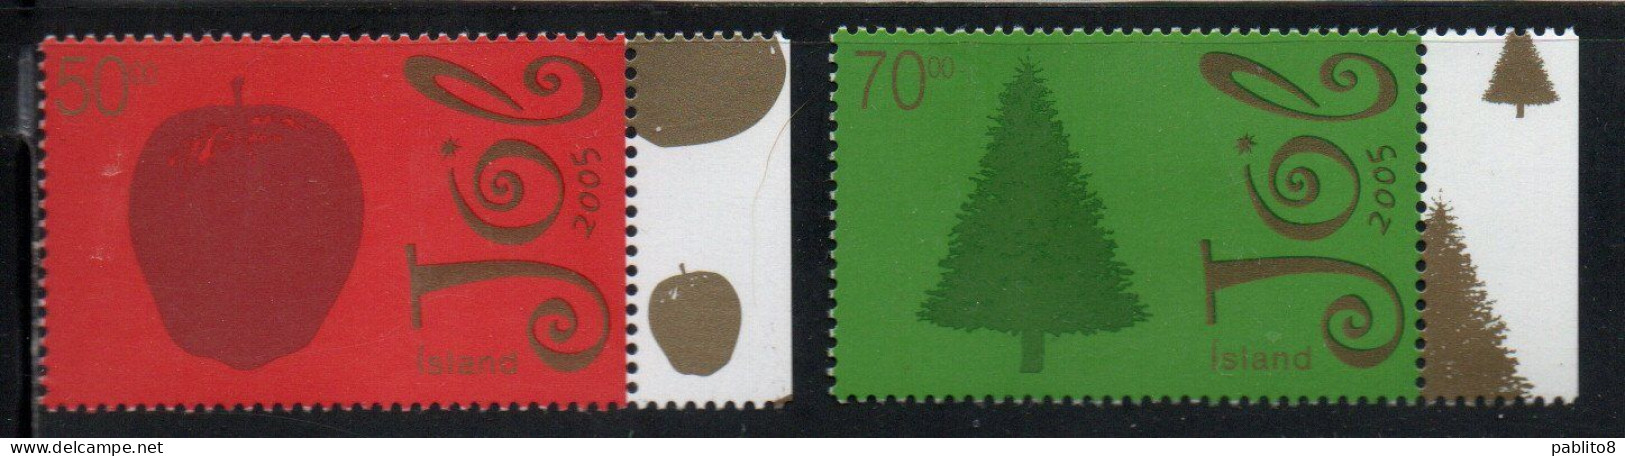 ISLANDA ICELAND ISLANDE 2005 CHRISTMAS NATALE NOEL WEIHNACHTEN NAVIDAD JOL COMPLETE SET SERIE COMPLETA MNH - Unused Stamps